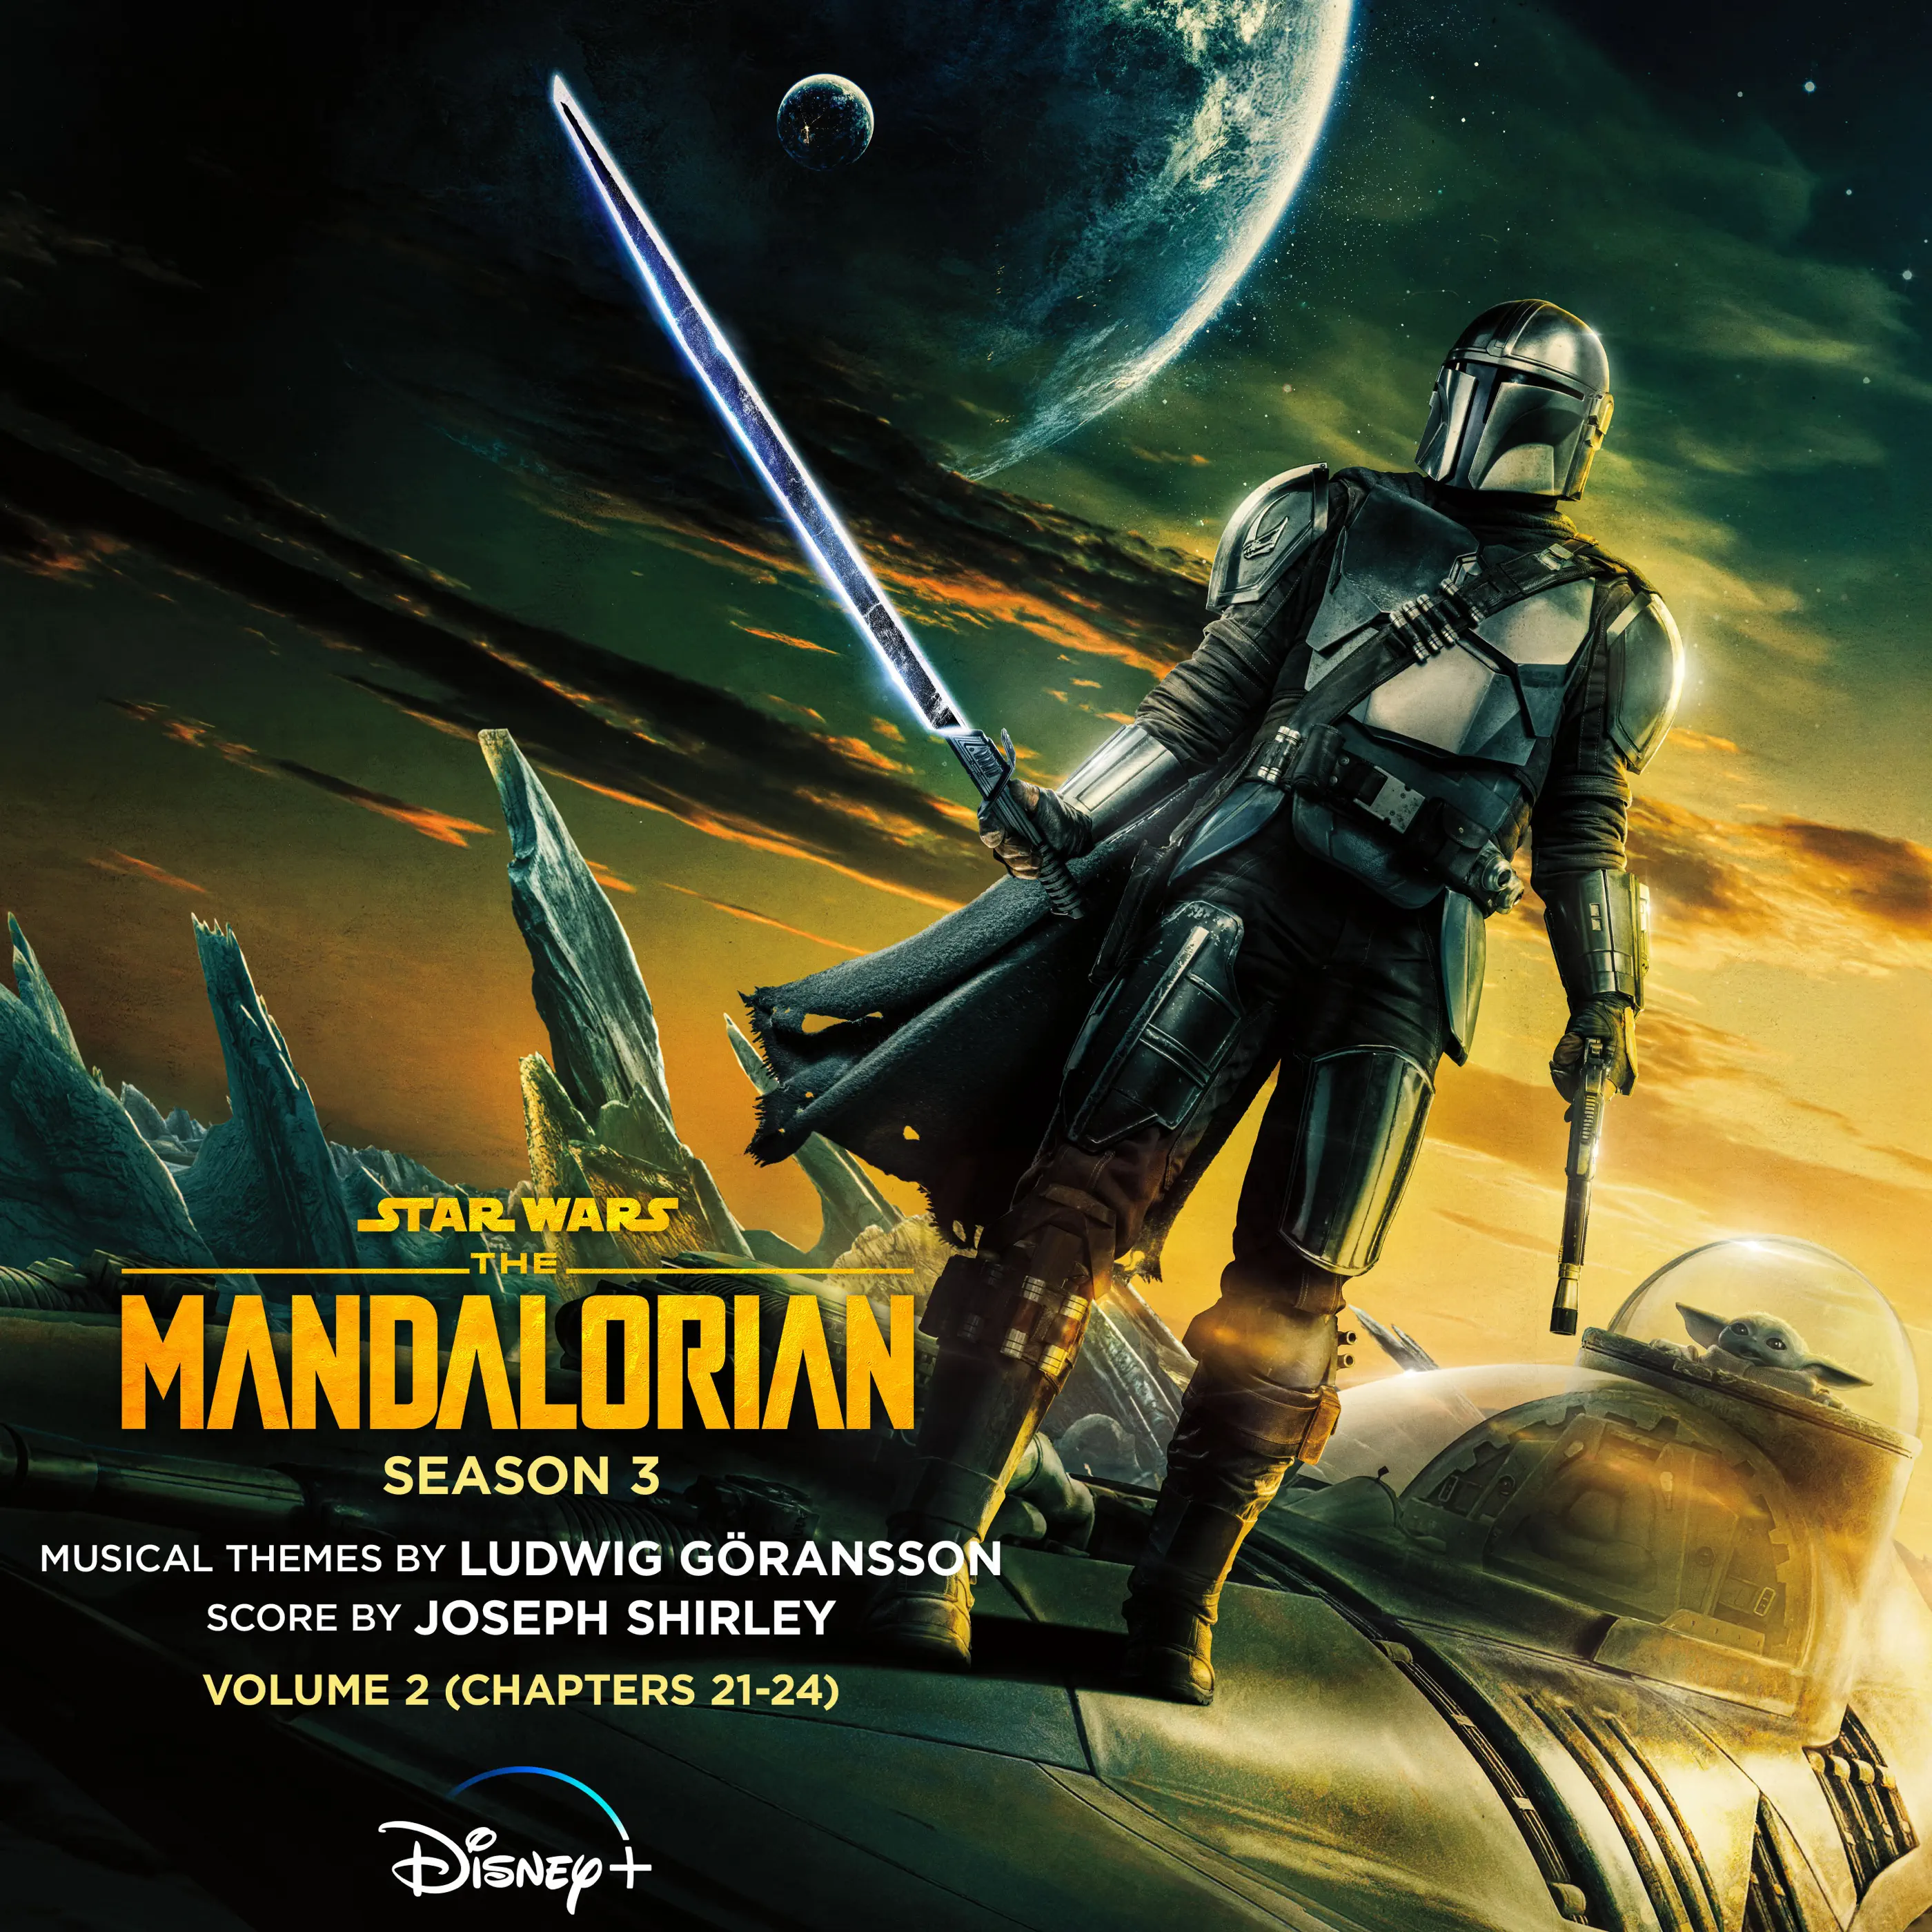 The Mandalorian Season 3 Boba Fett Breakdown and Star Wars Movies